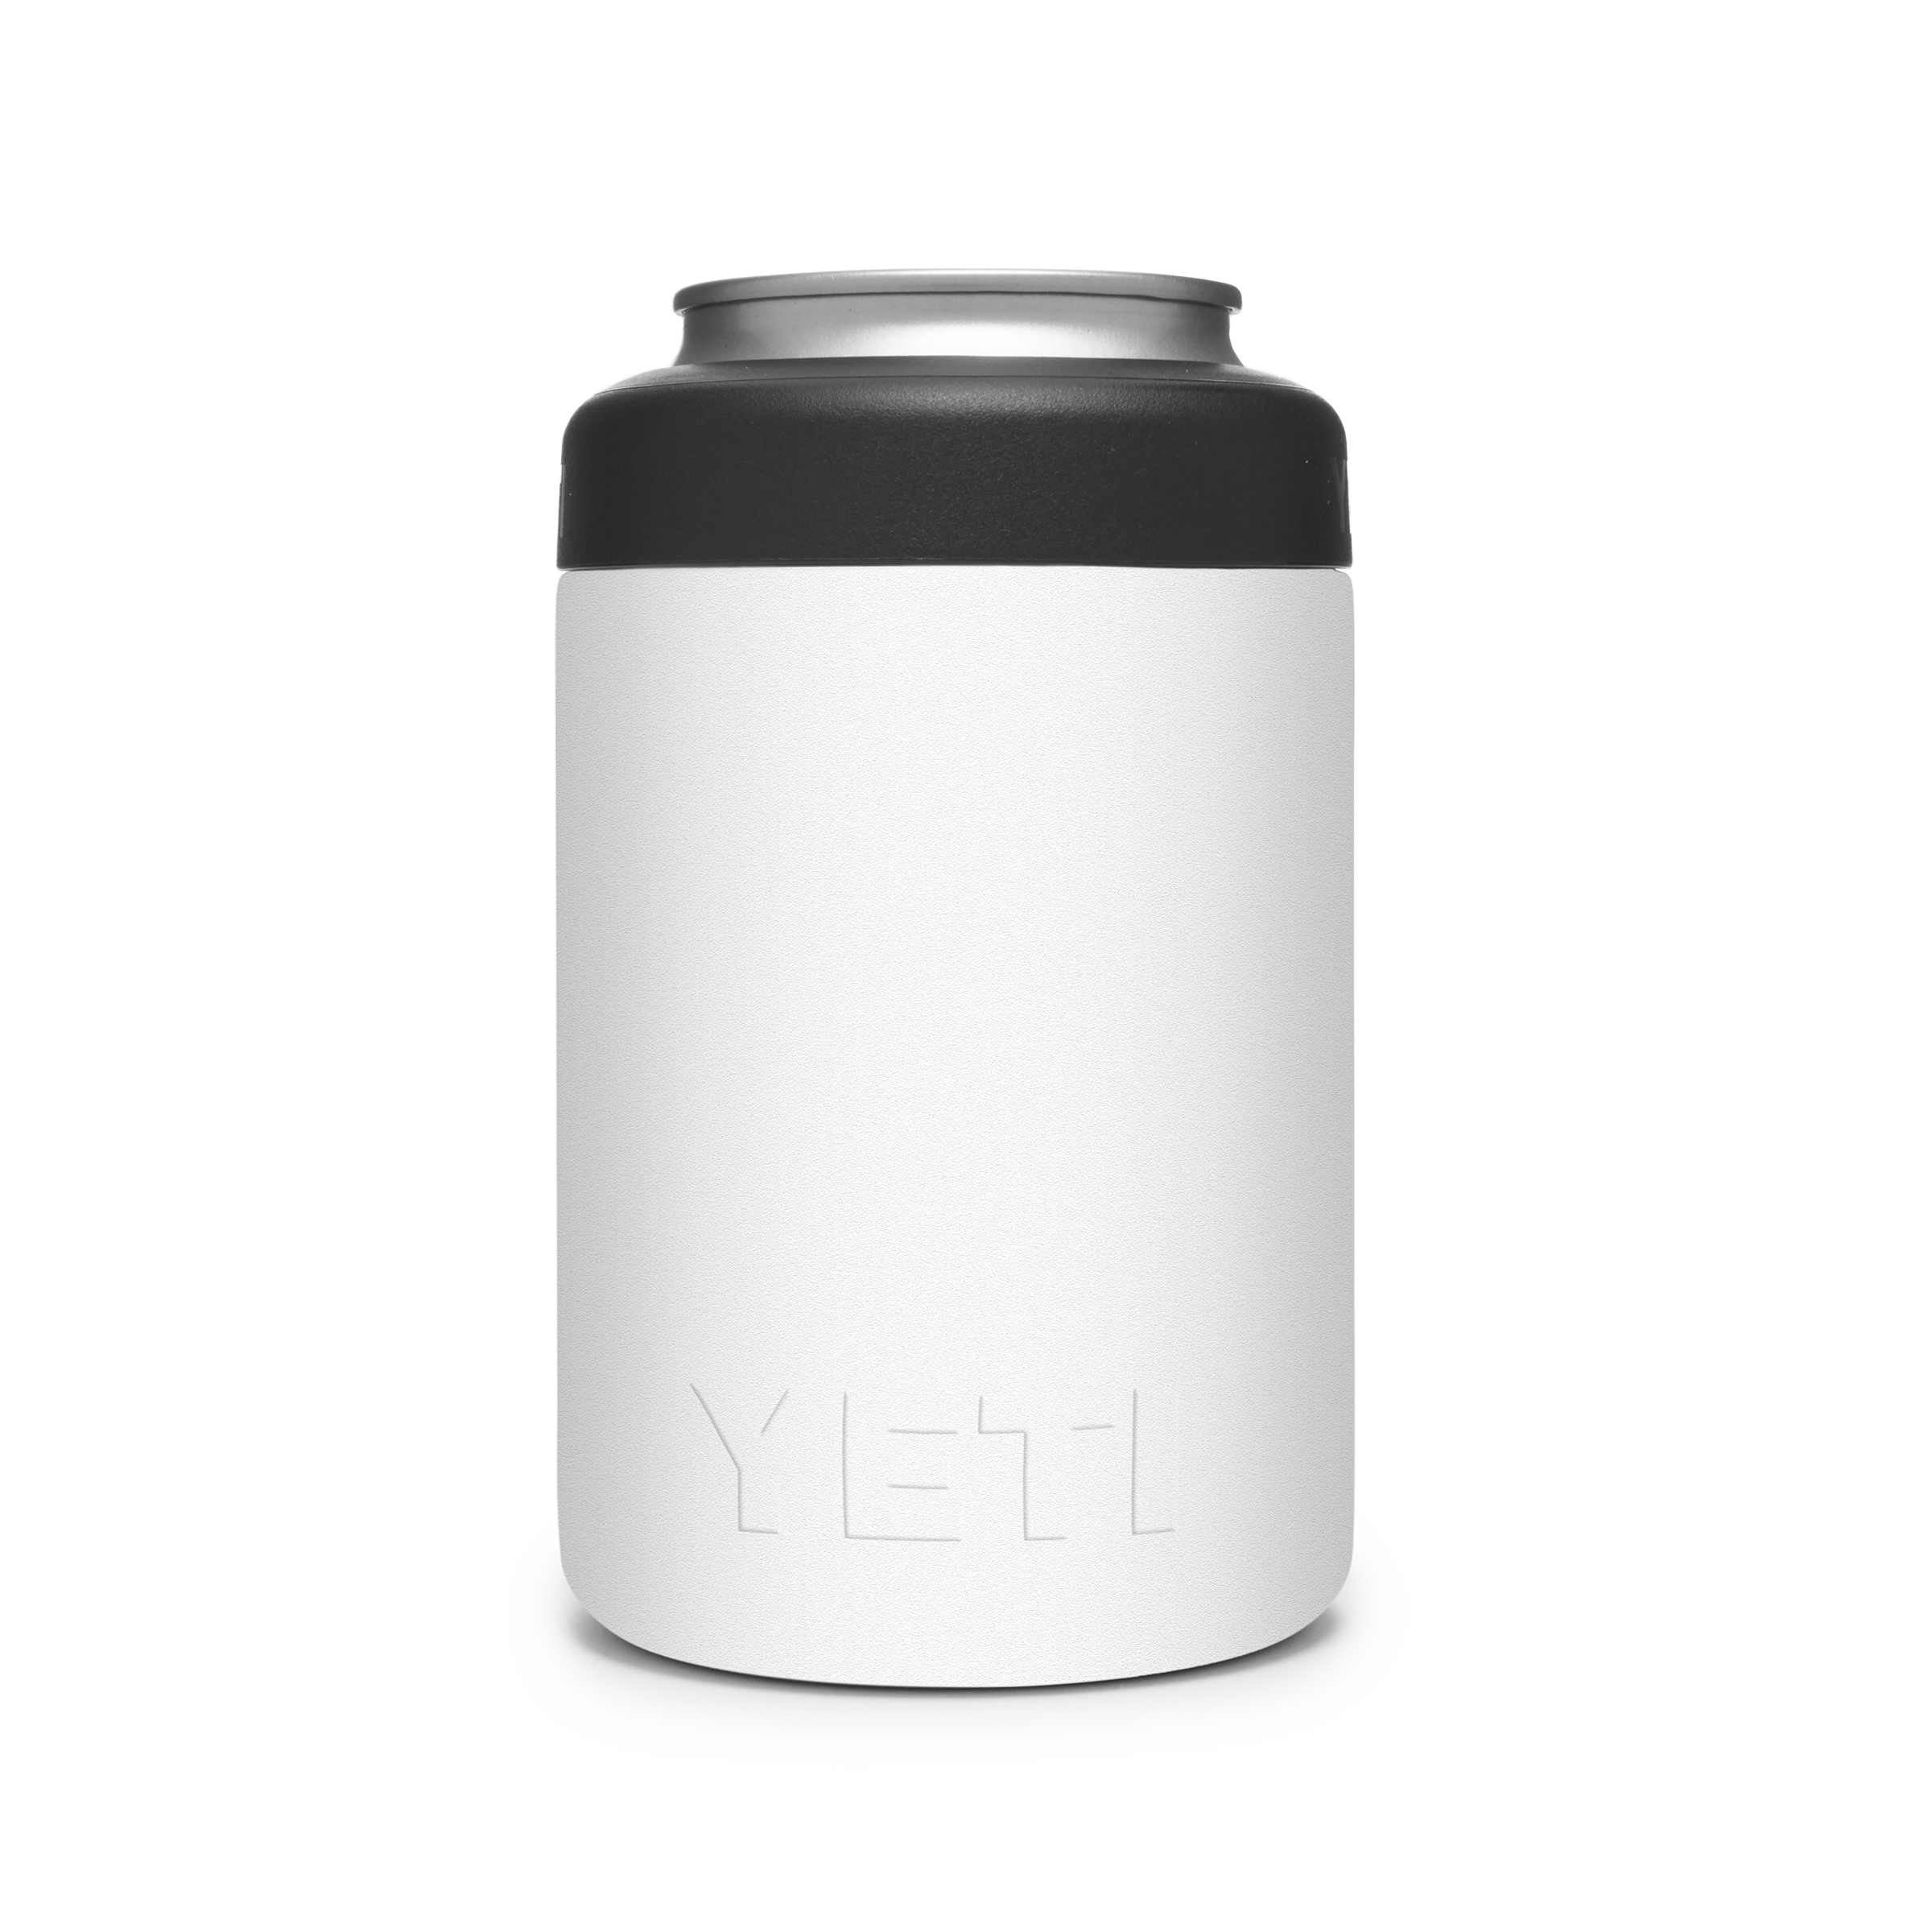 The YETI Rambler Colster 99-Minute Cold Beer Koozie Challenge